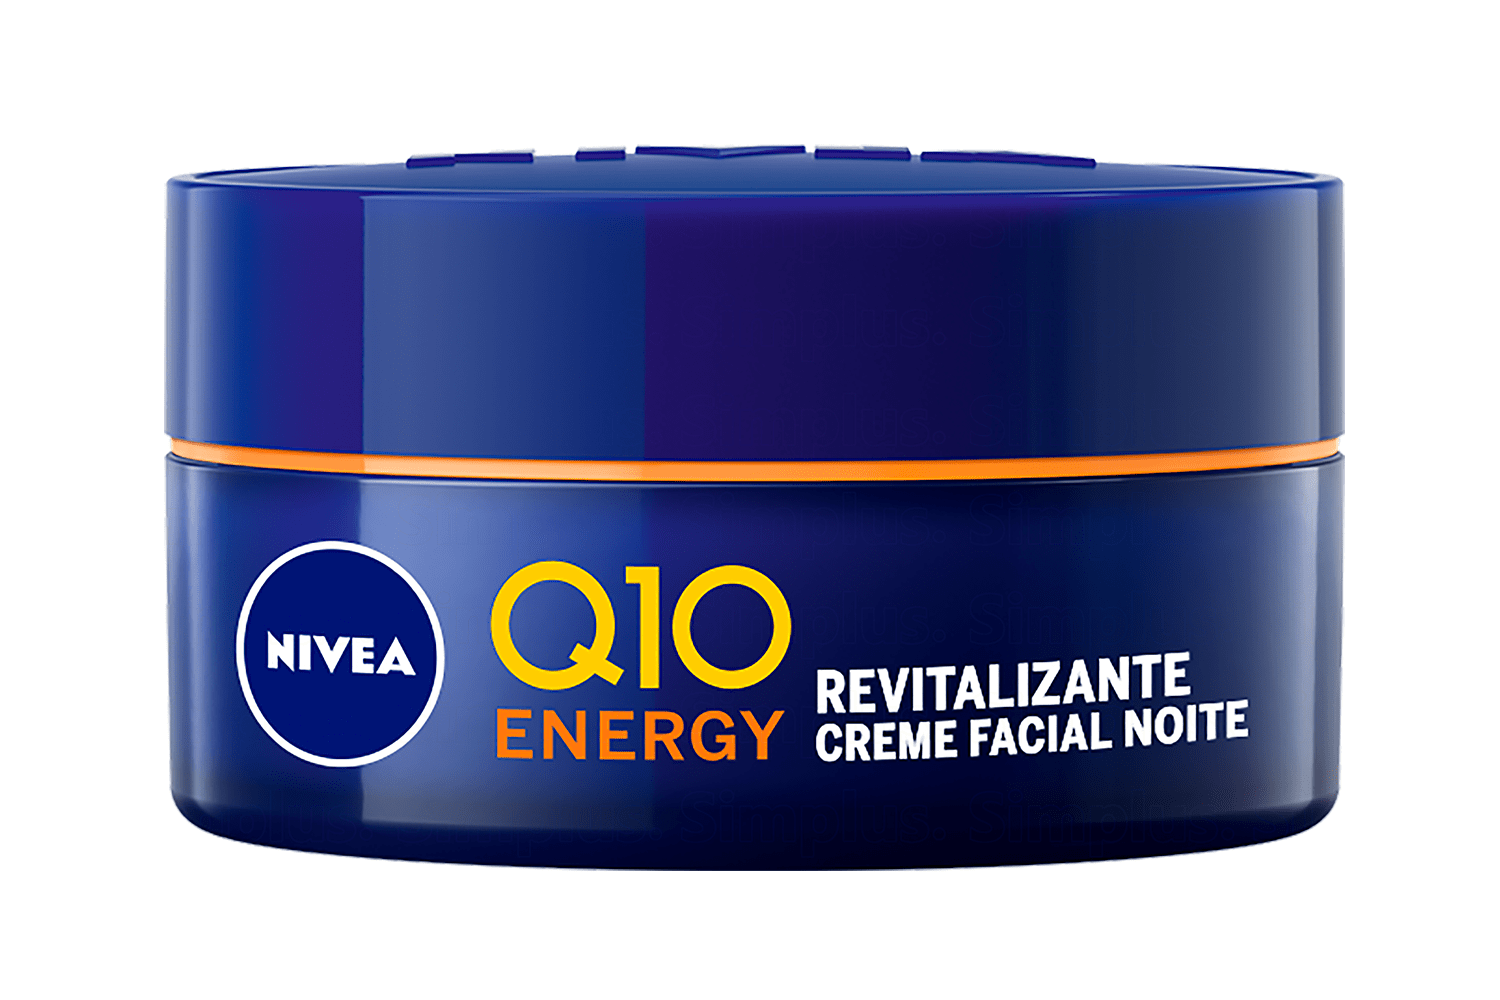 Creme Facial Noite Q10 Energy Revitalizante Nivea - 50g